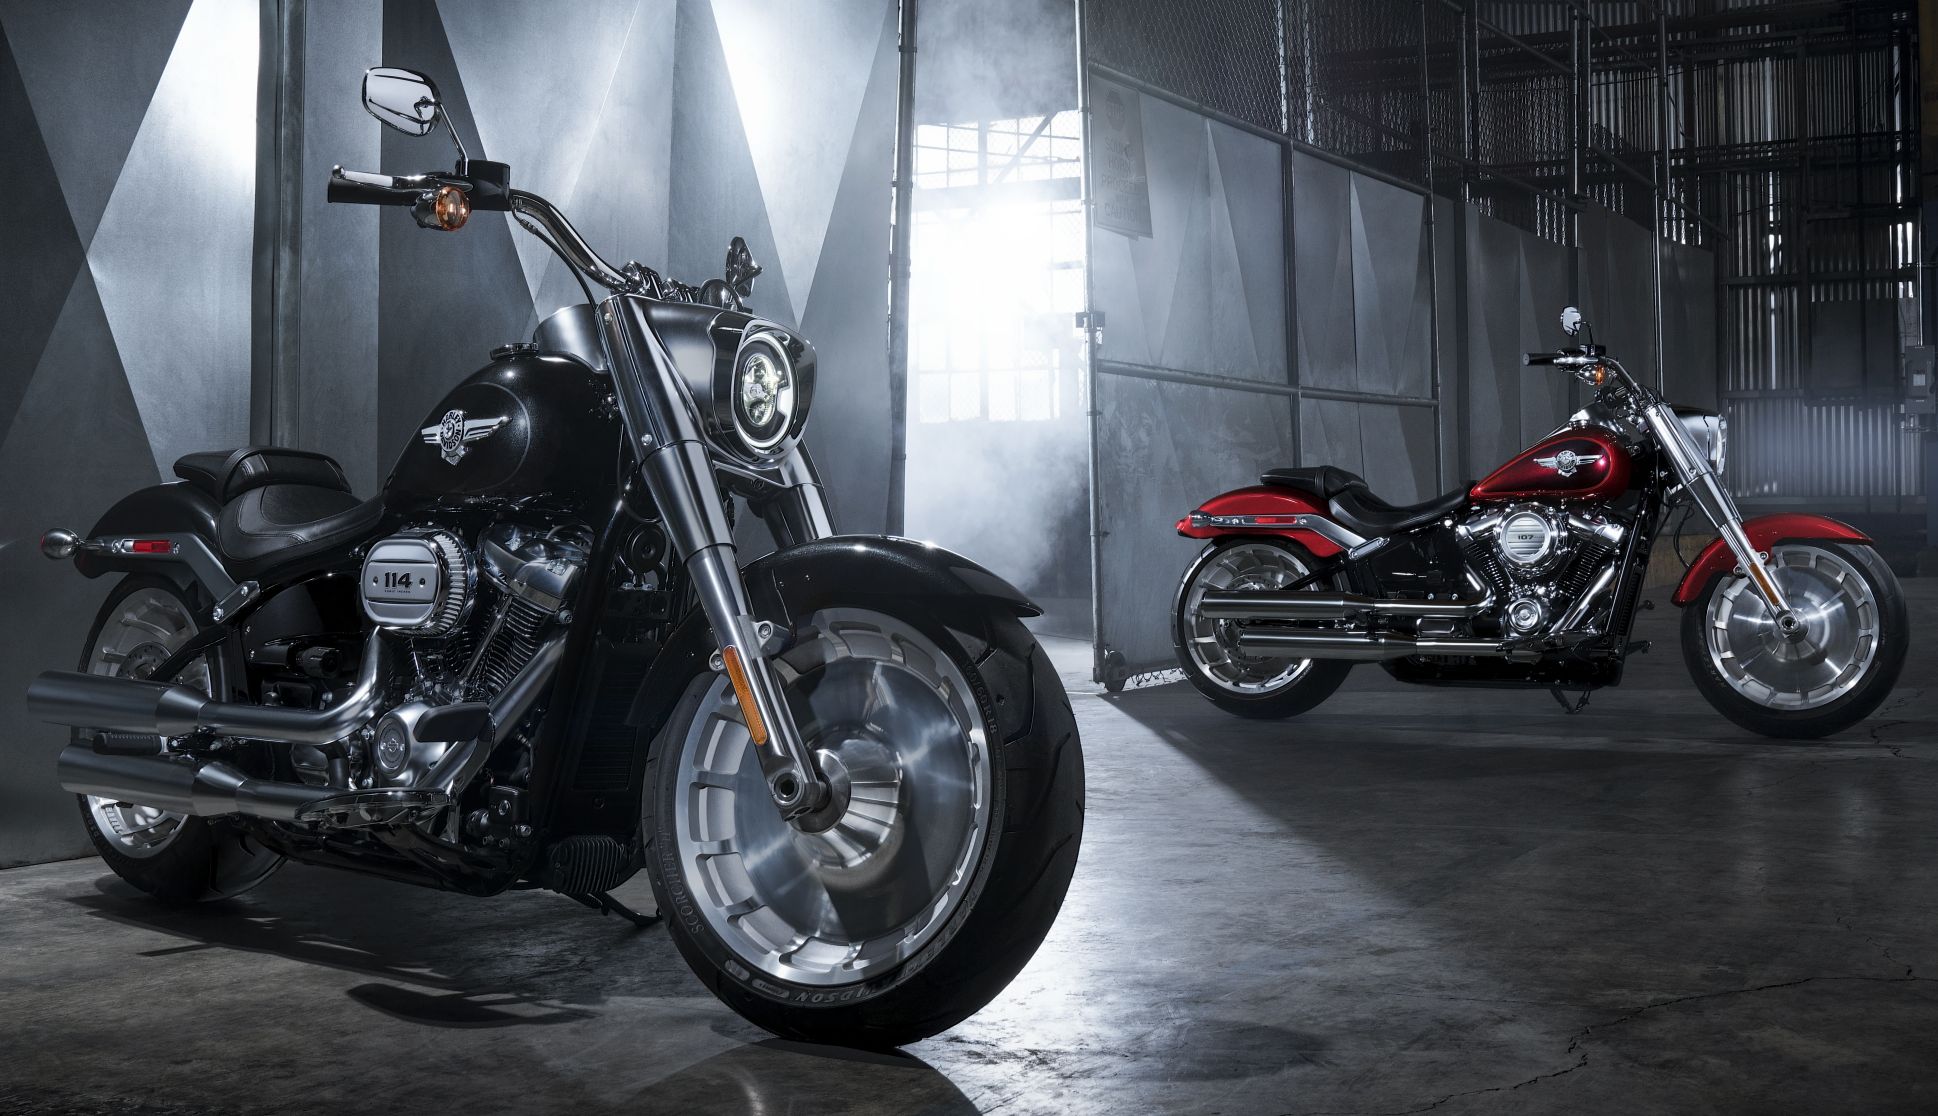 2019 Harley-Davidson Malaysia price list updated Paul Tan ...